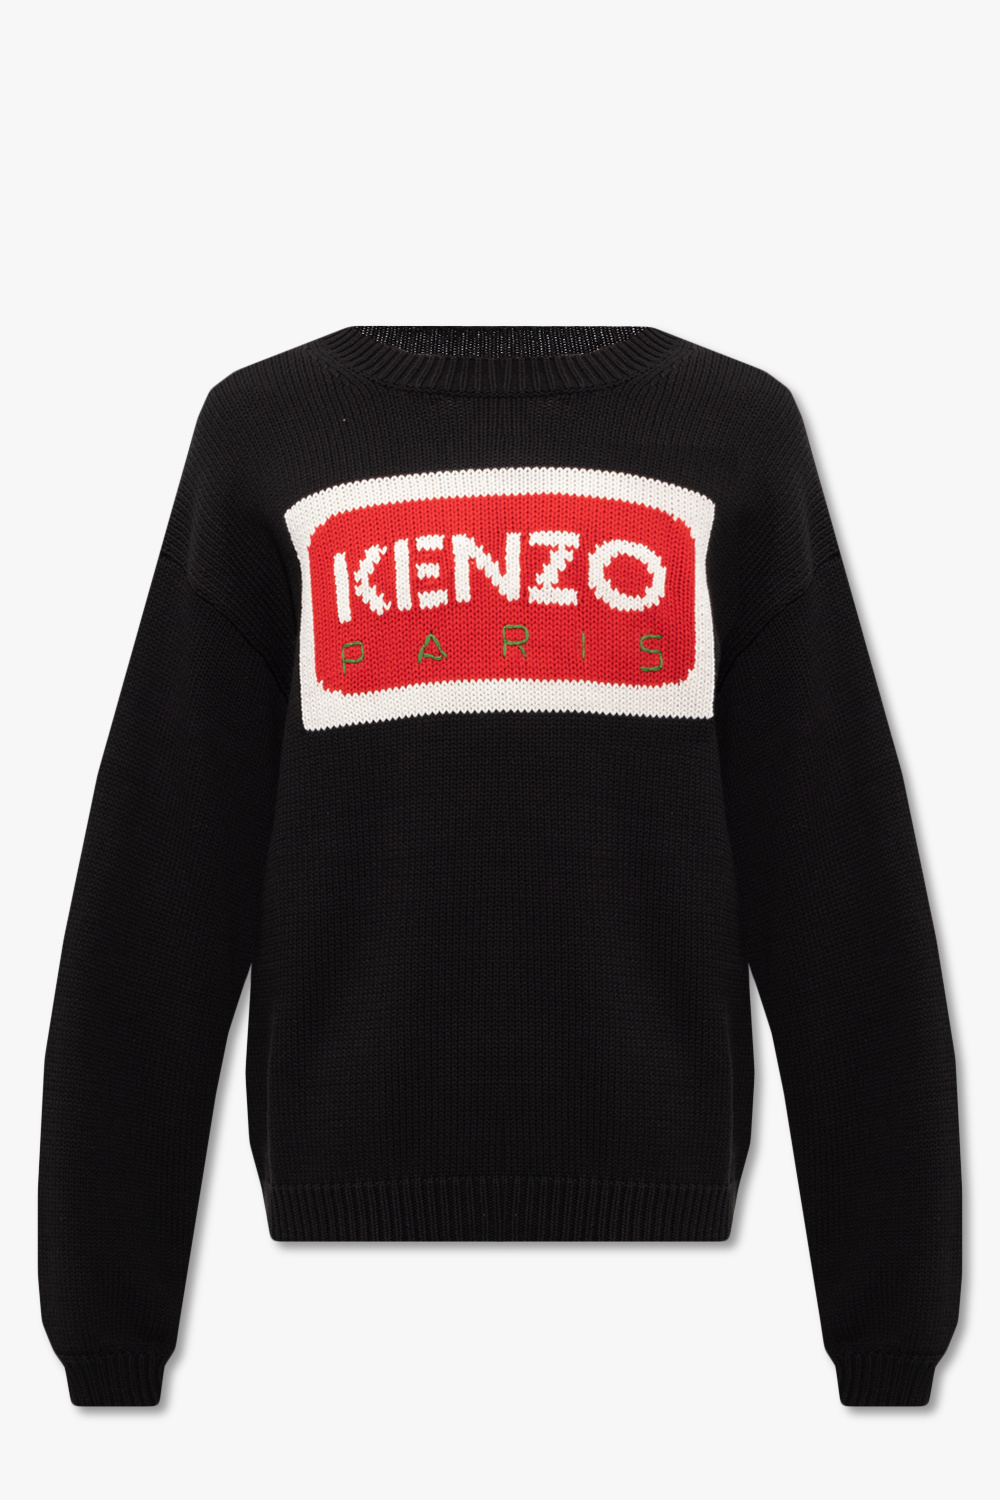 Sweatshirt Essential Big - GenesinlifeShops Italy - Shirt Kenzo - Armour  Graphic Twist Big Logo Short Sleeve T